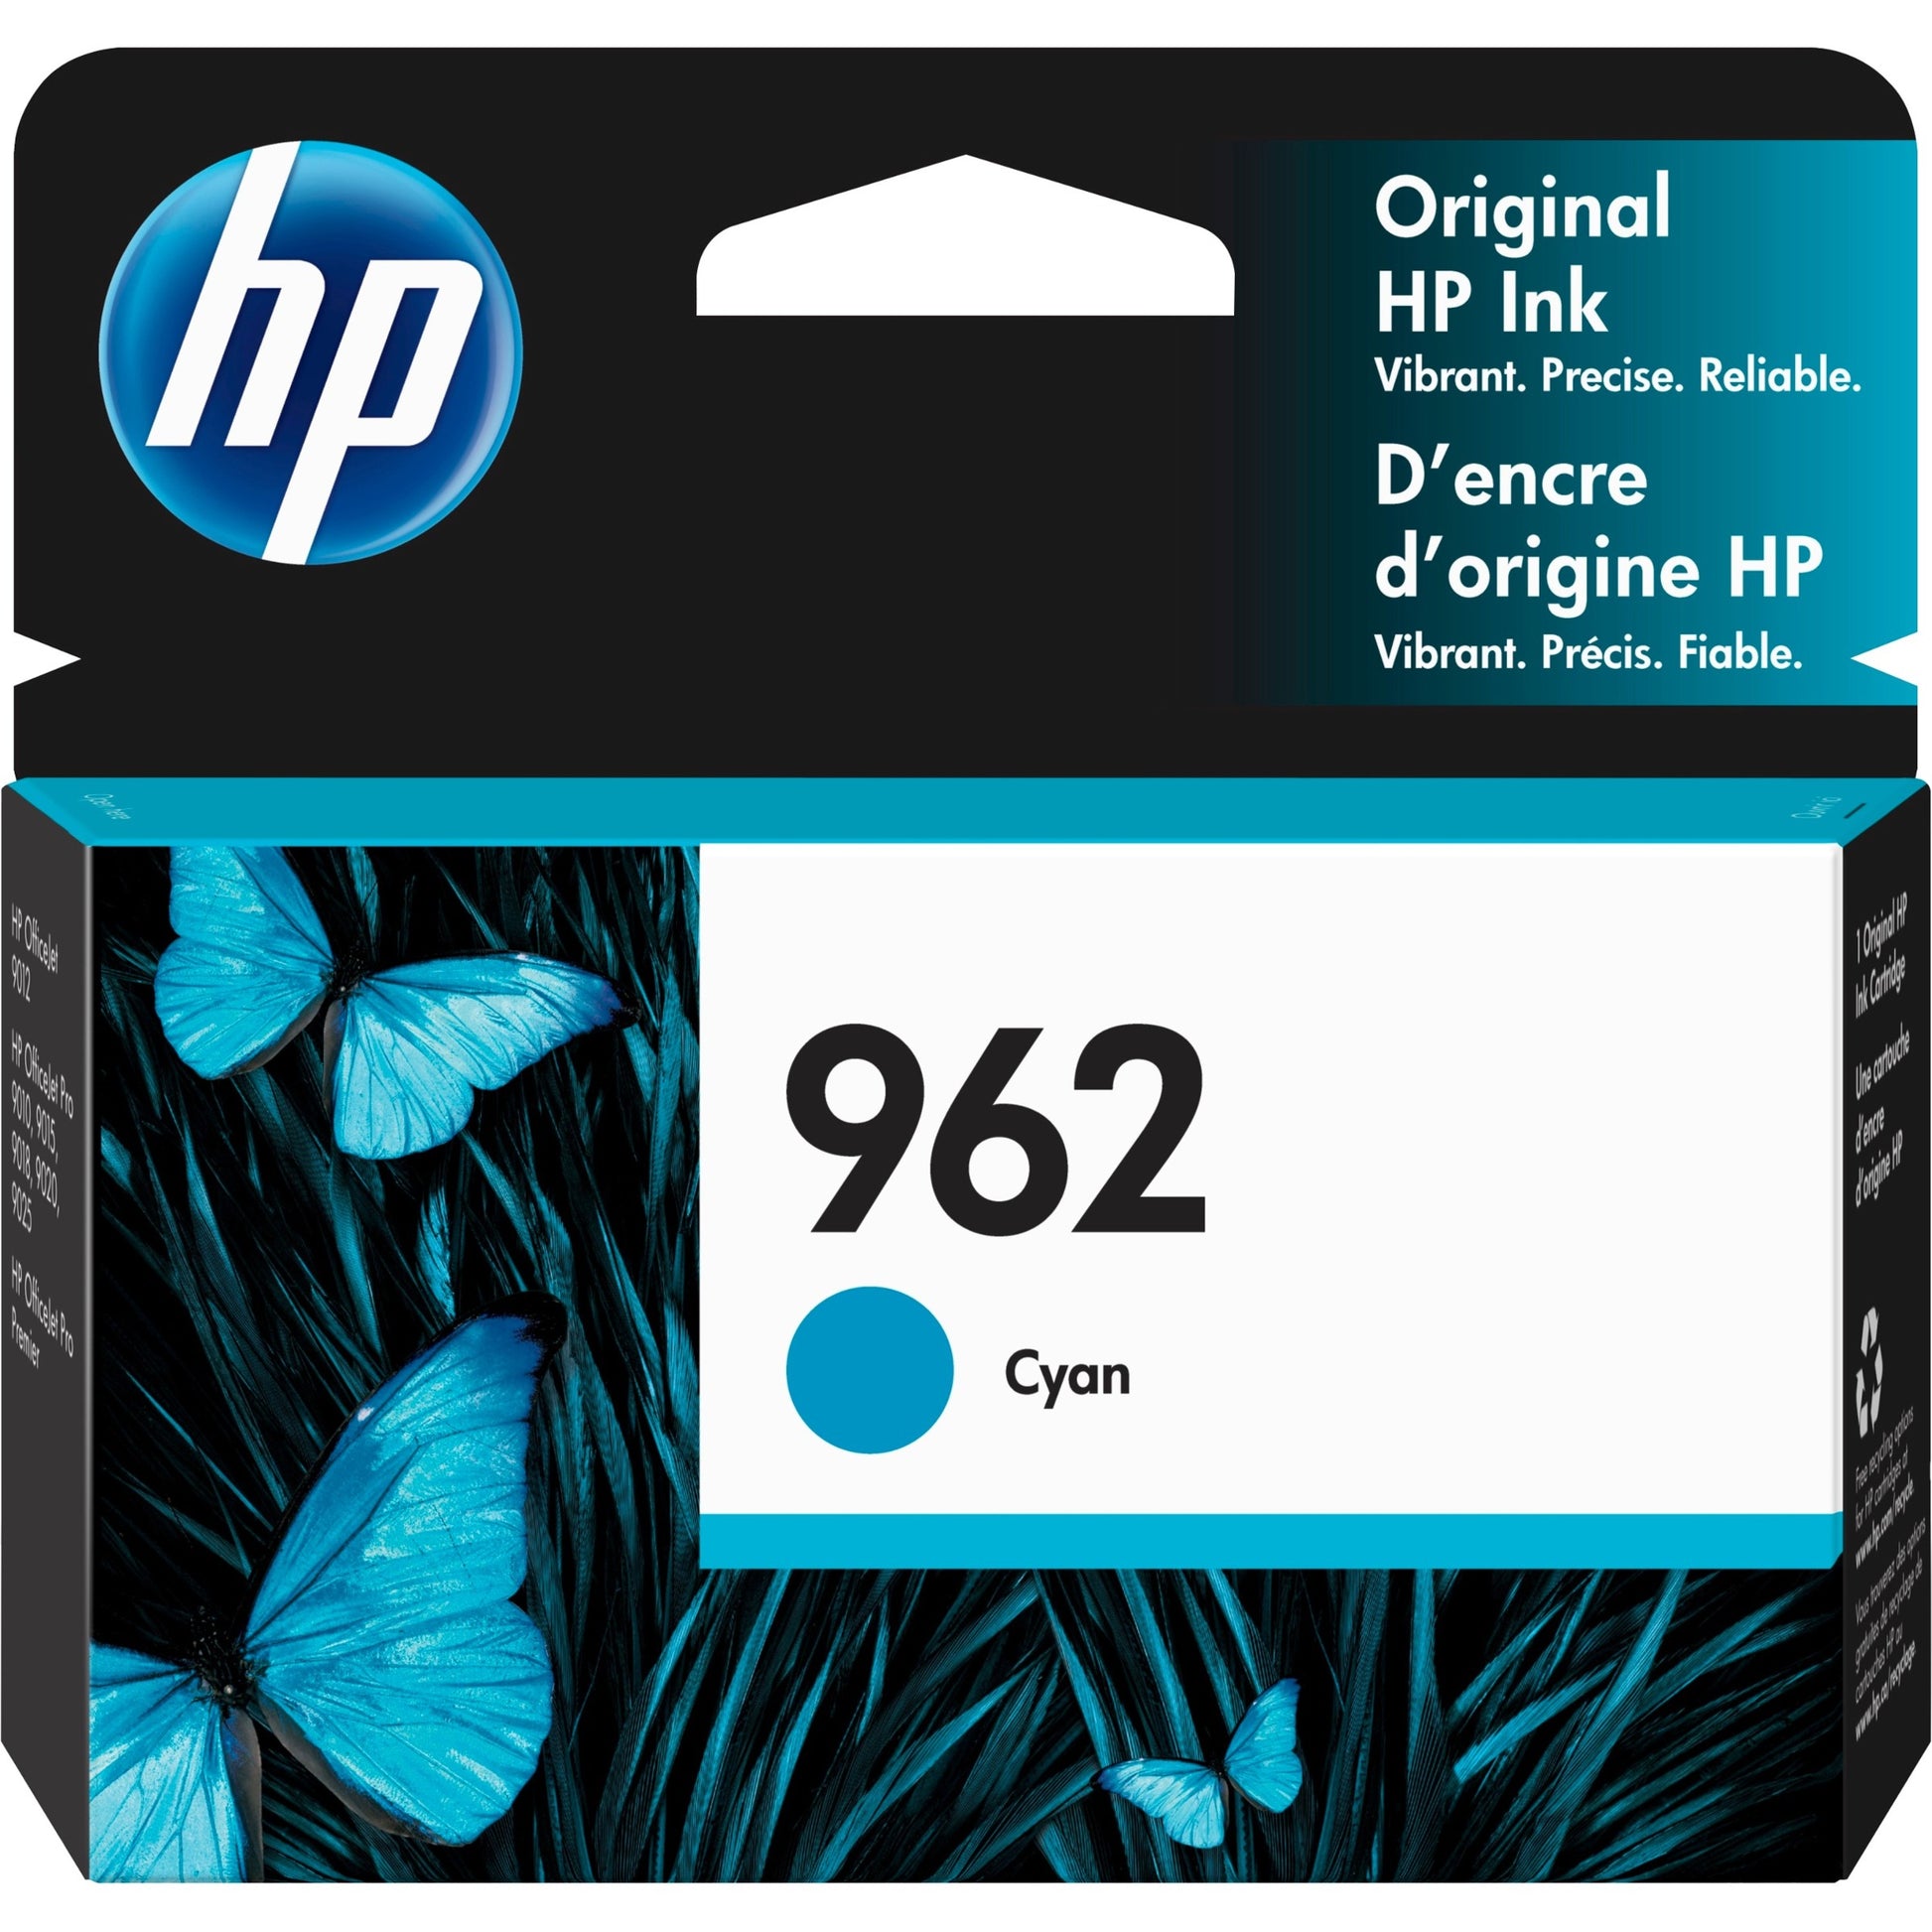 HP 962 Original Ink Cartridge - Cyan